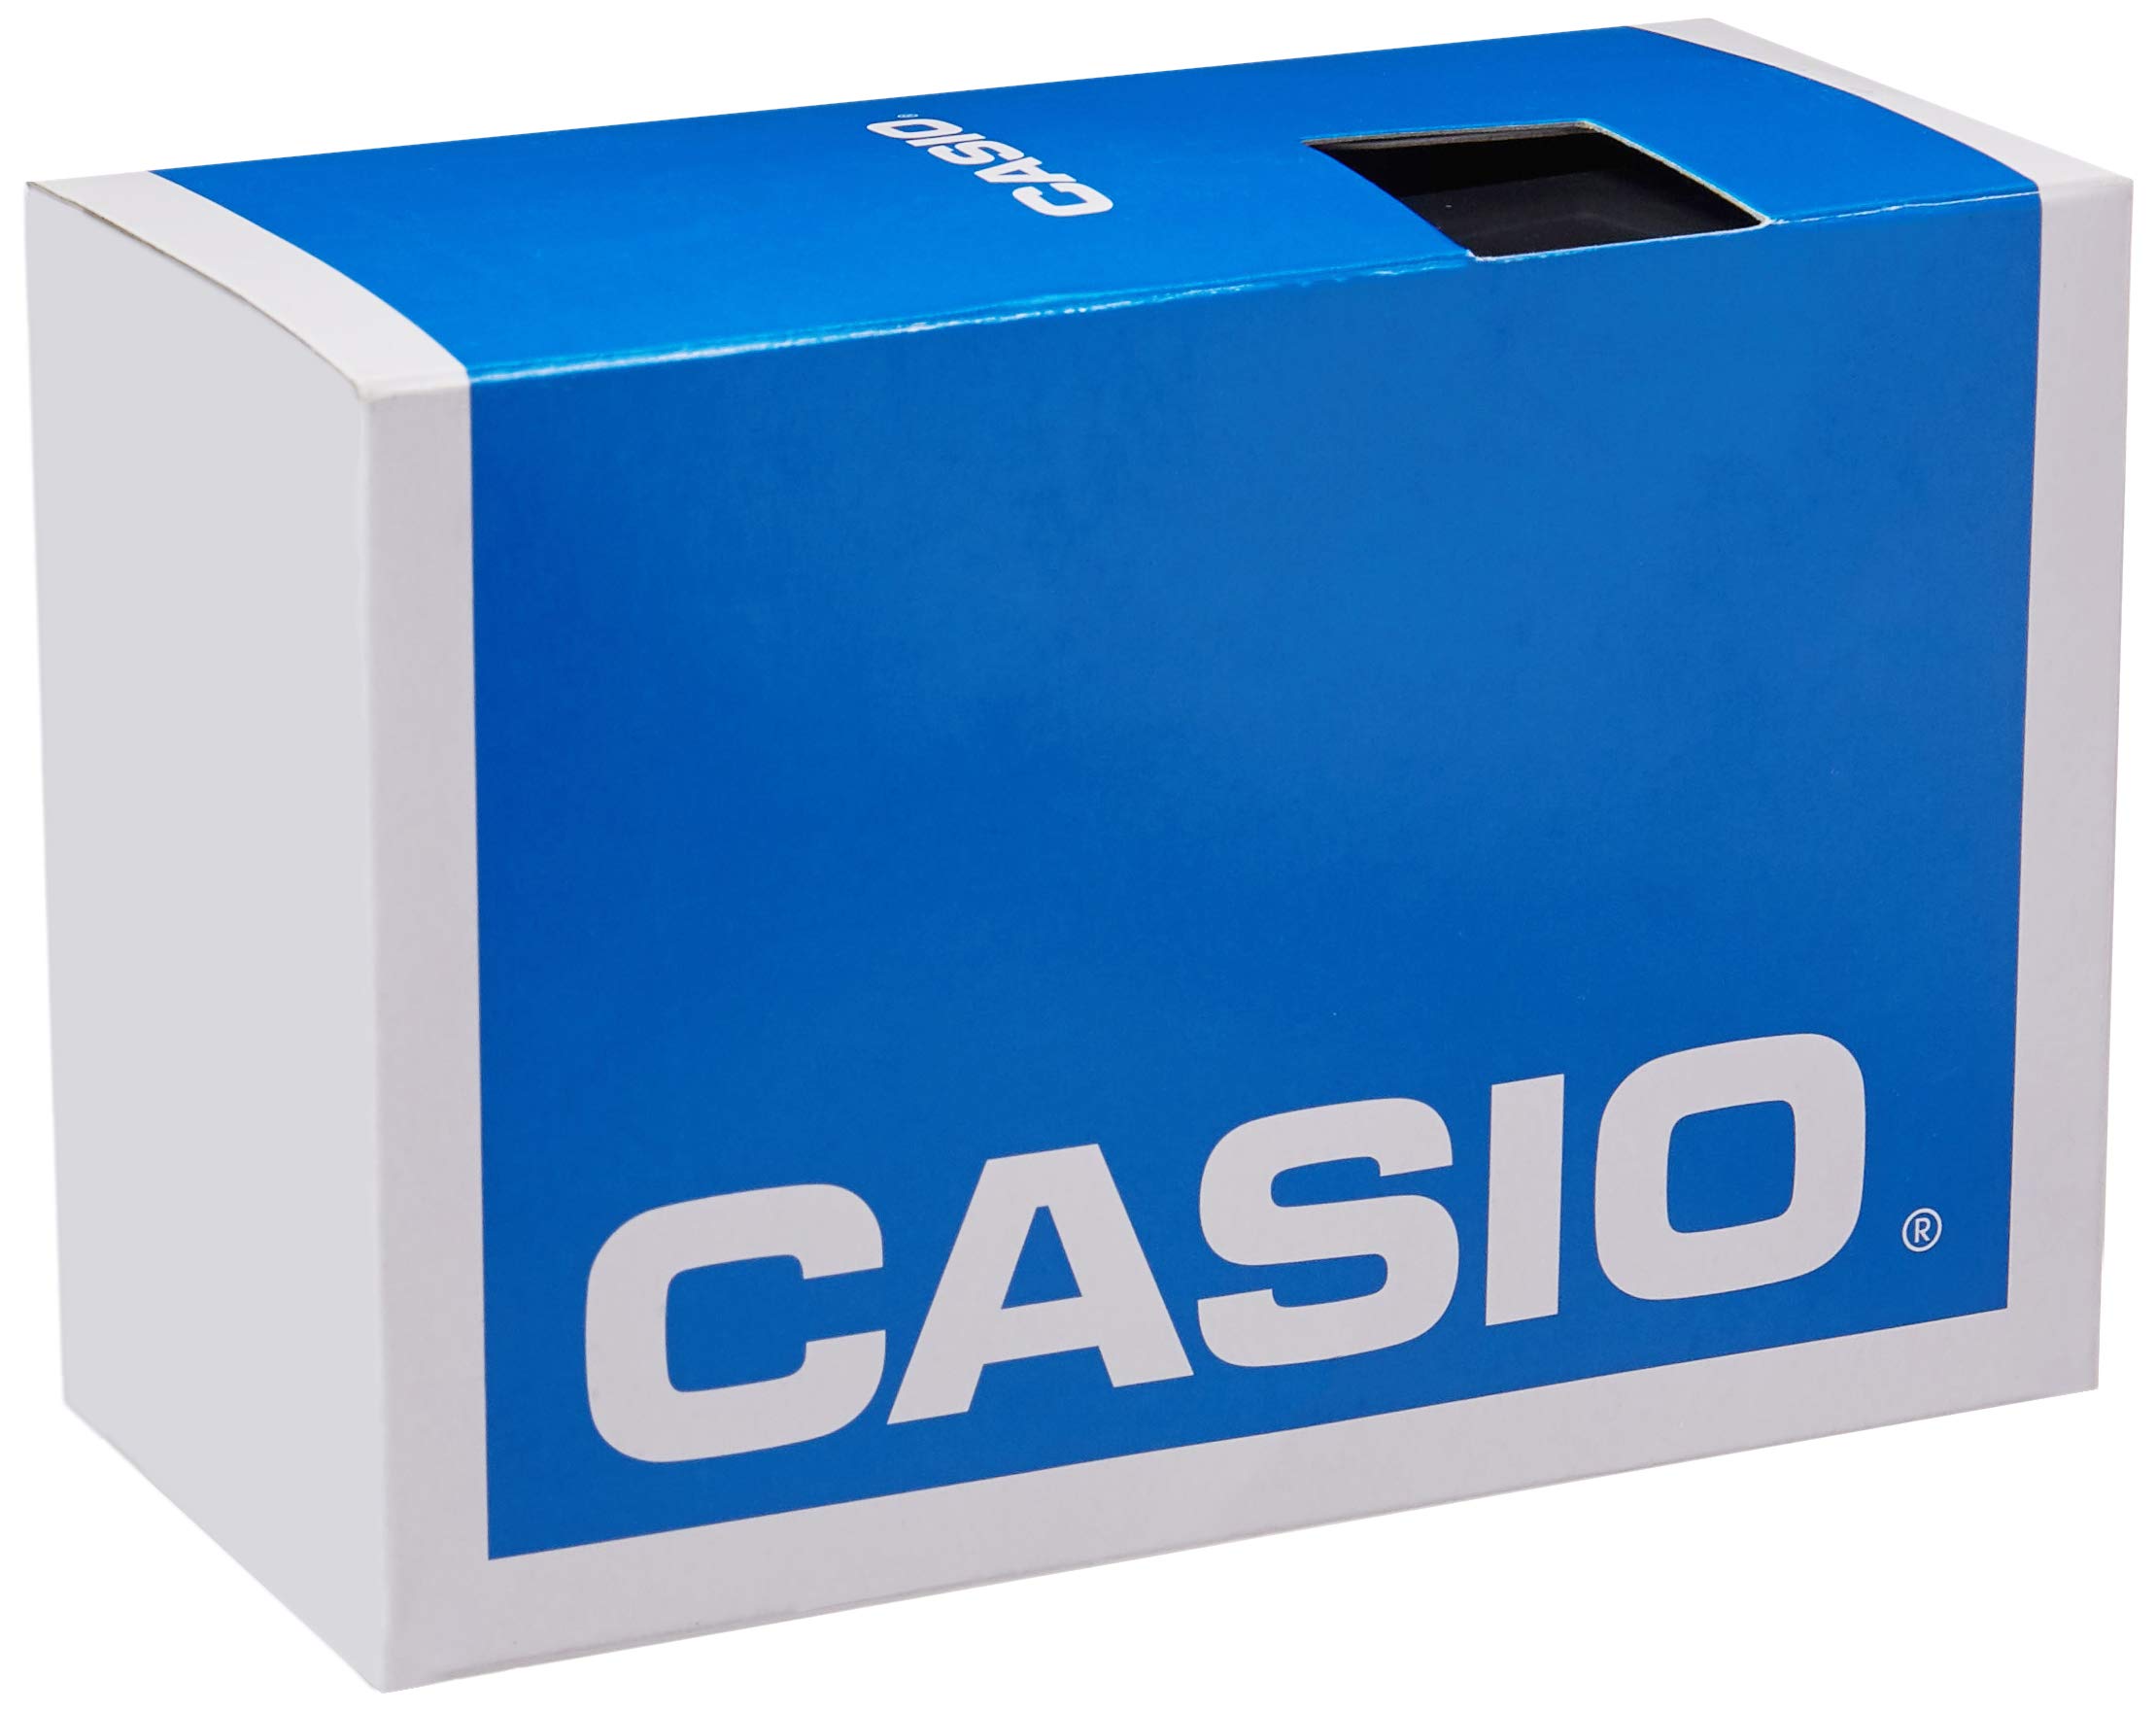 Casio 10-Year Battery